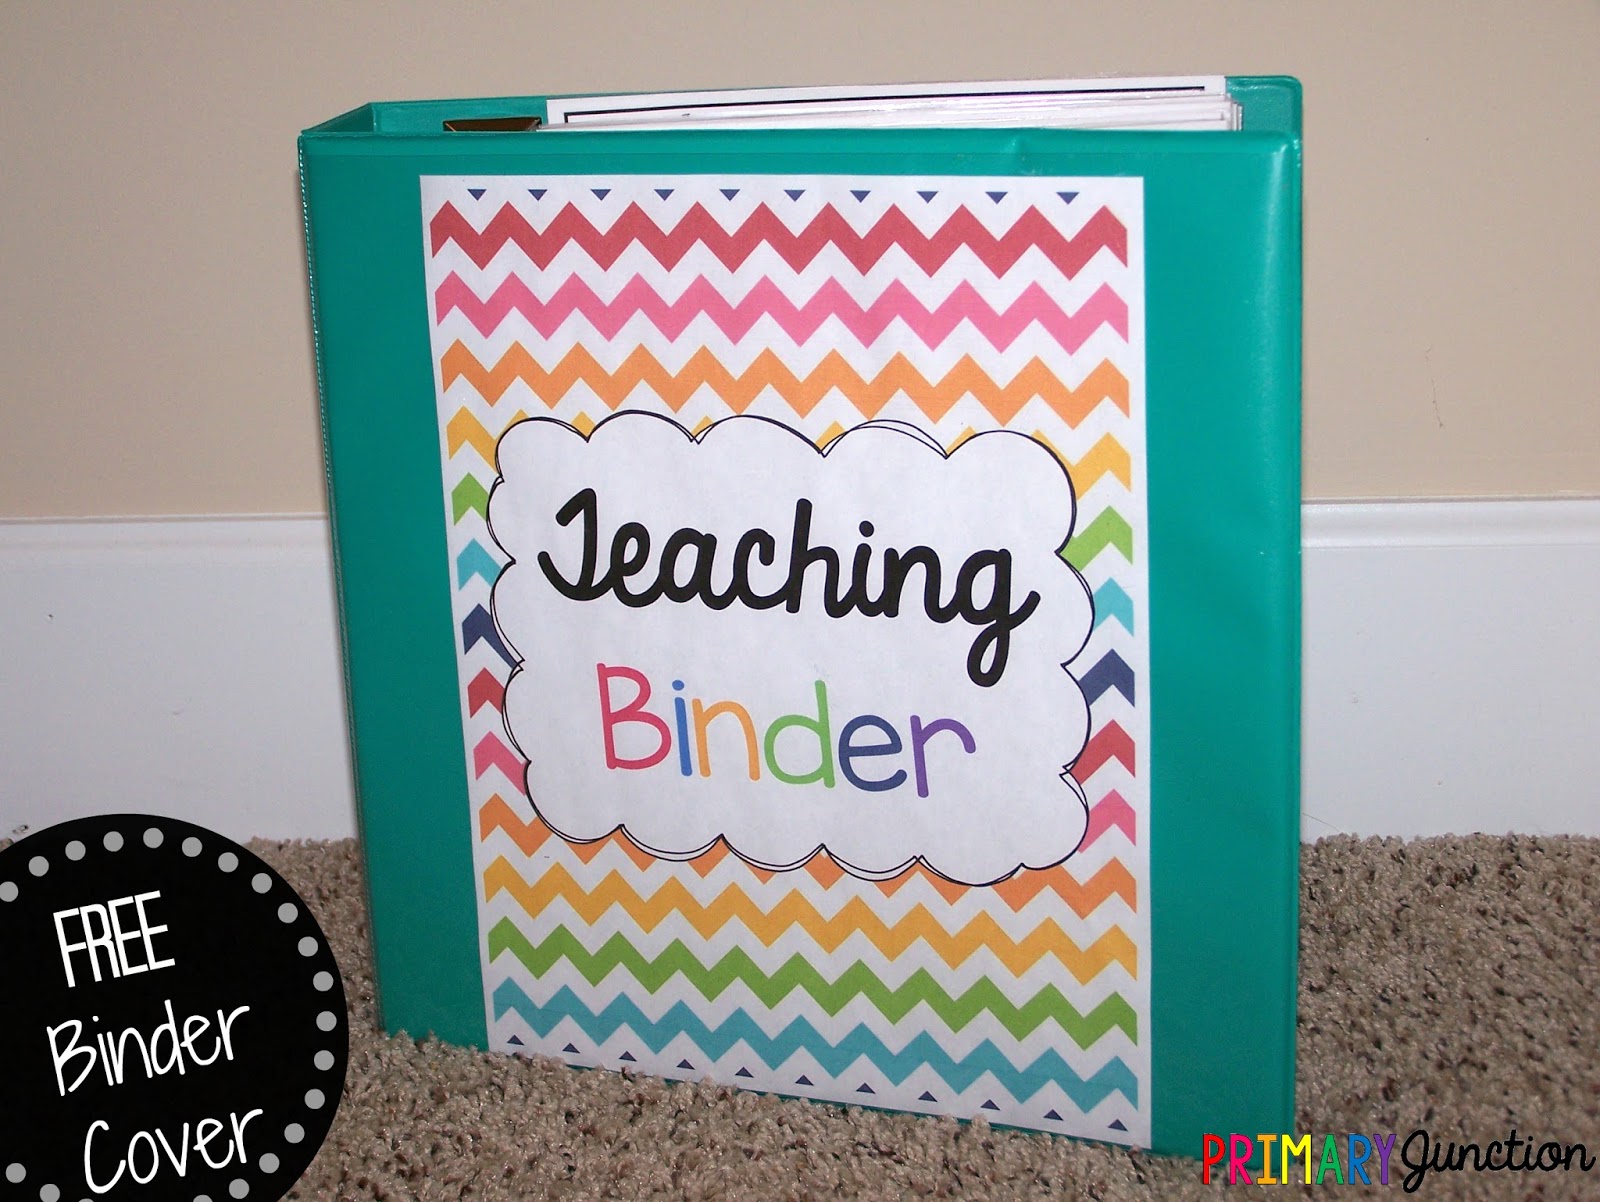 free-teacher-binder-cover-primary-junction